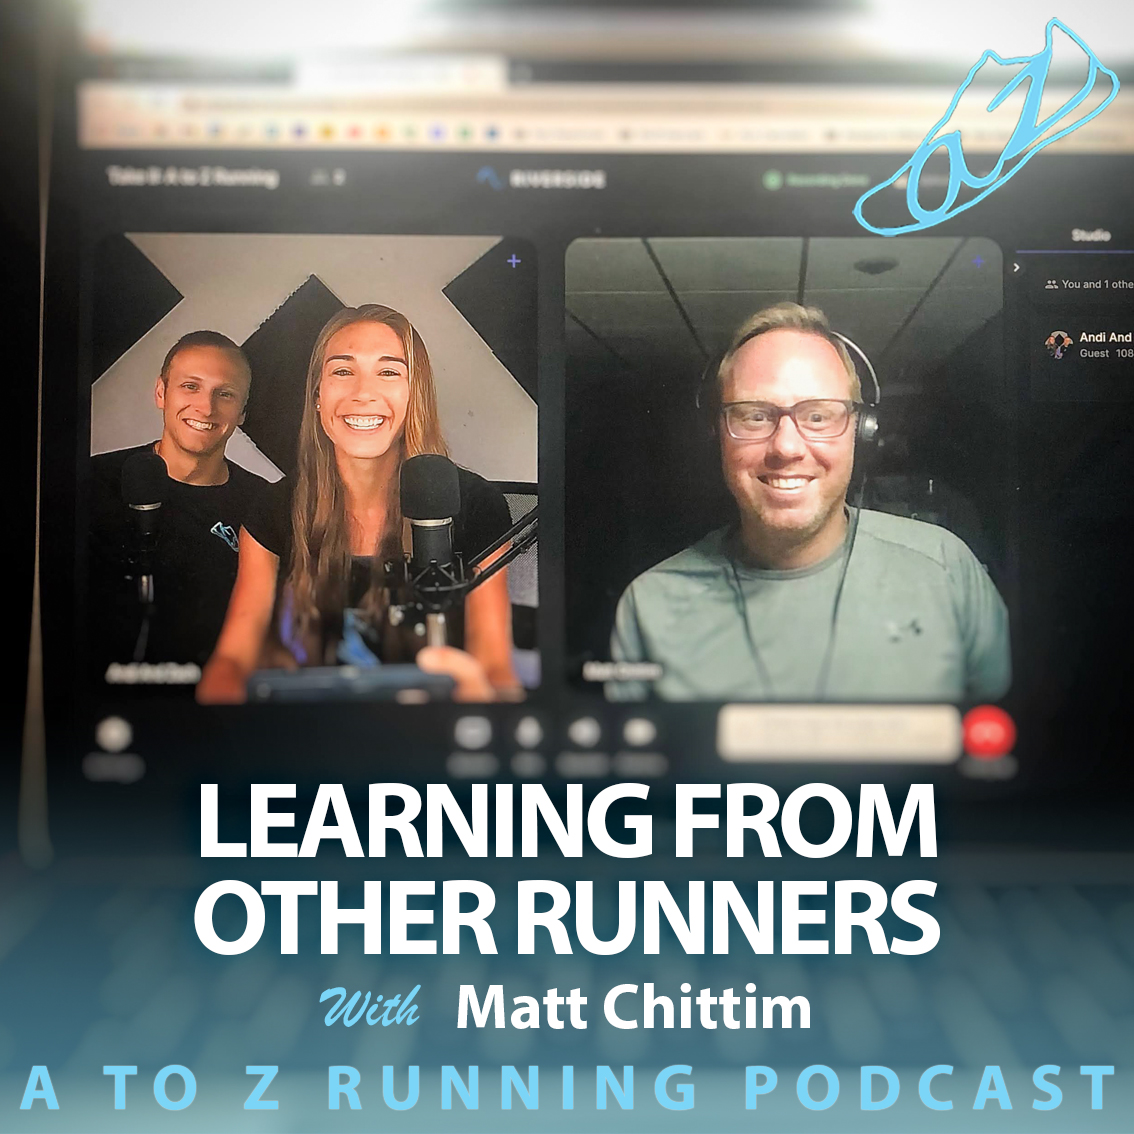 Matt Chittim on the A to Z Running Podcast